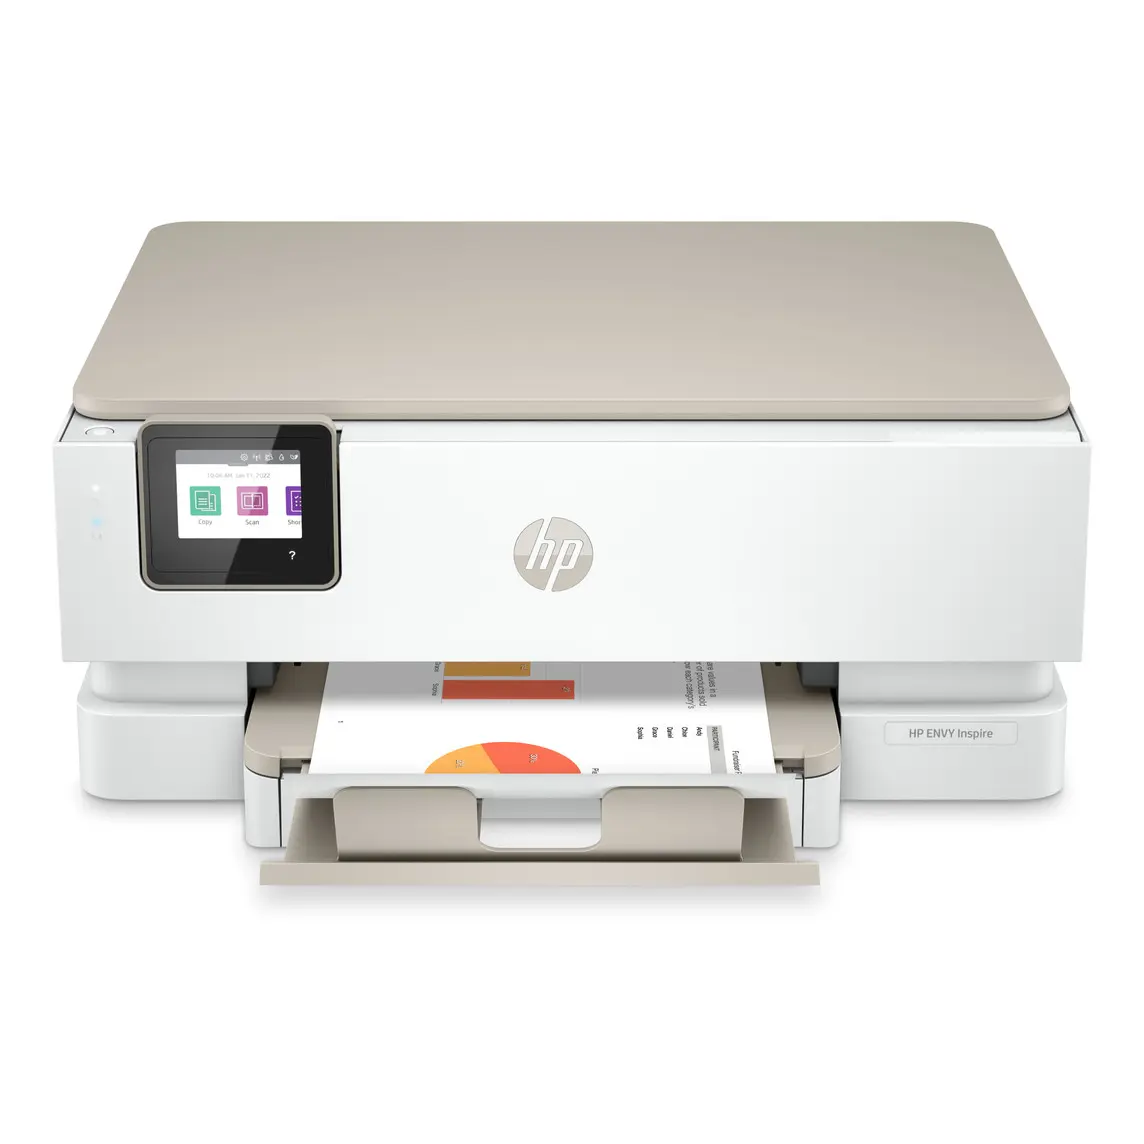 hewlett packard printer - How do you troubleshoot an HP printer that won't print